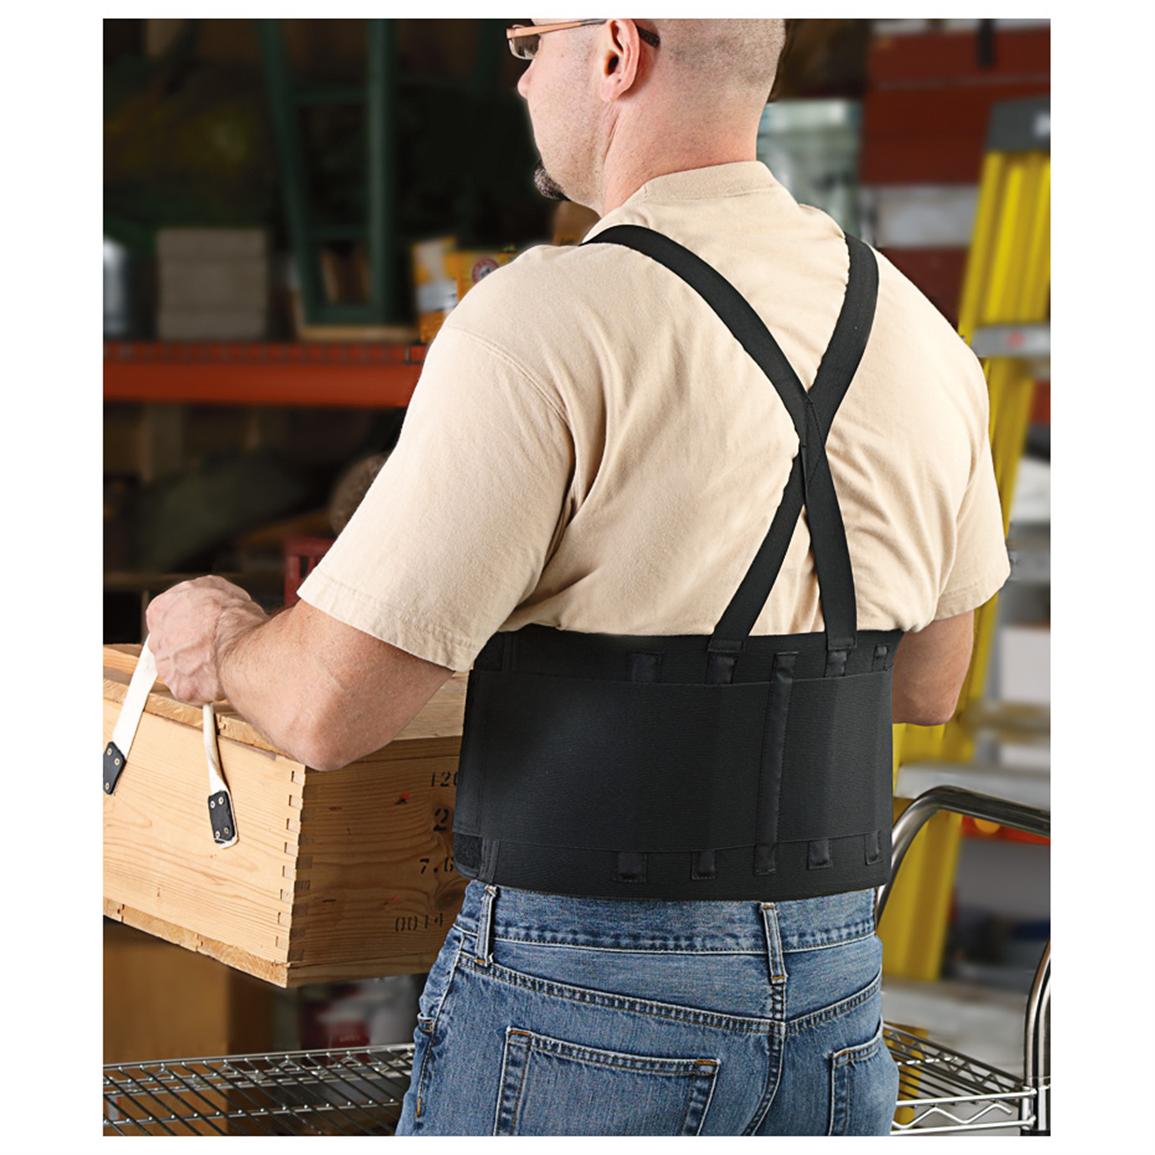 Elastic Back Support Belt 581541, Garage & Tool Accessories at Sportsman's Guide